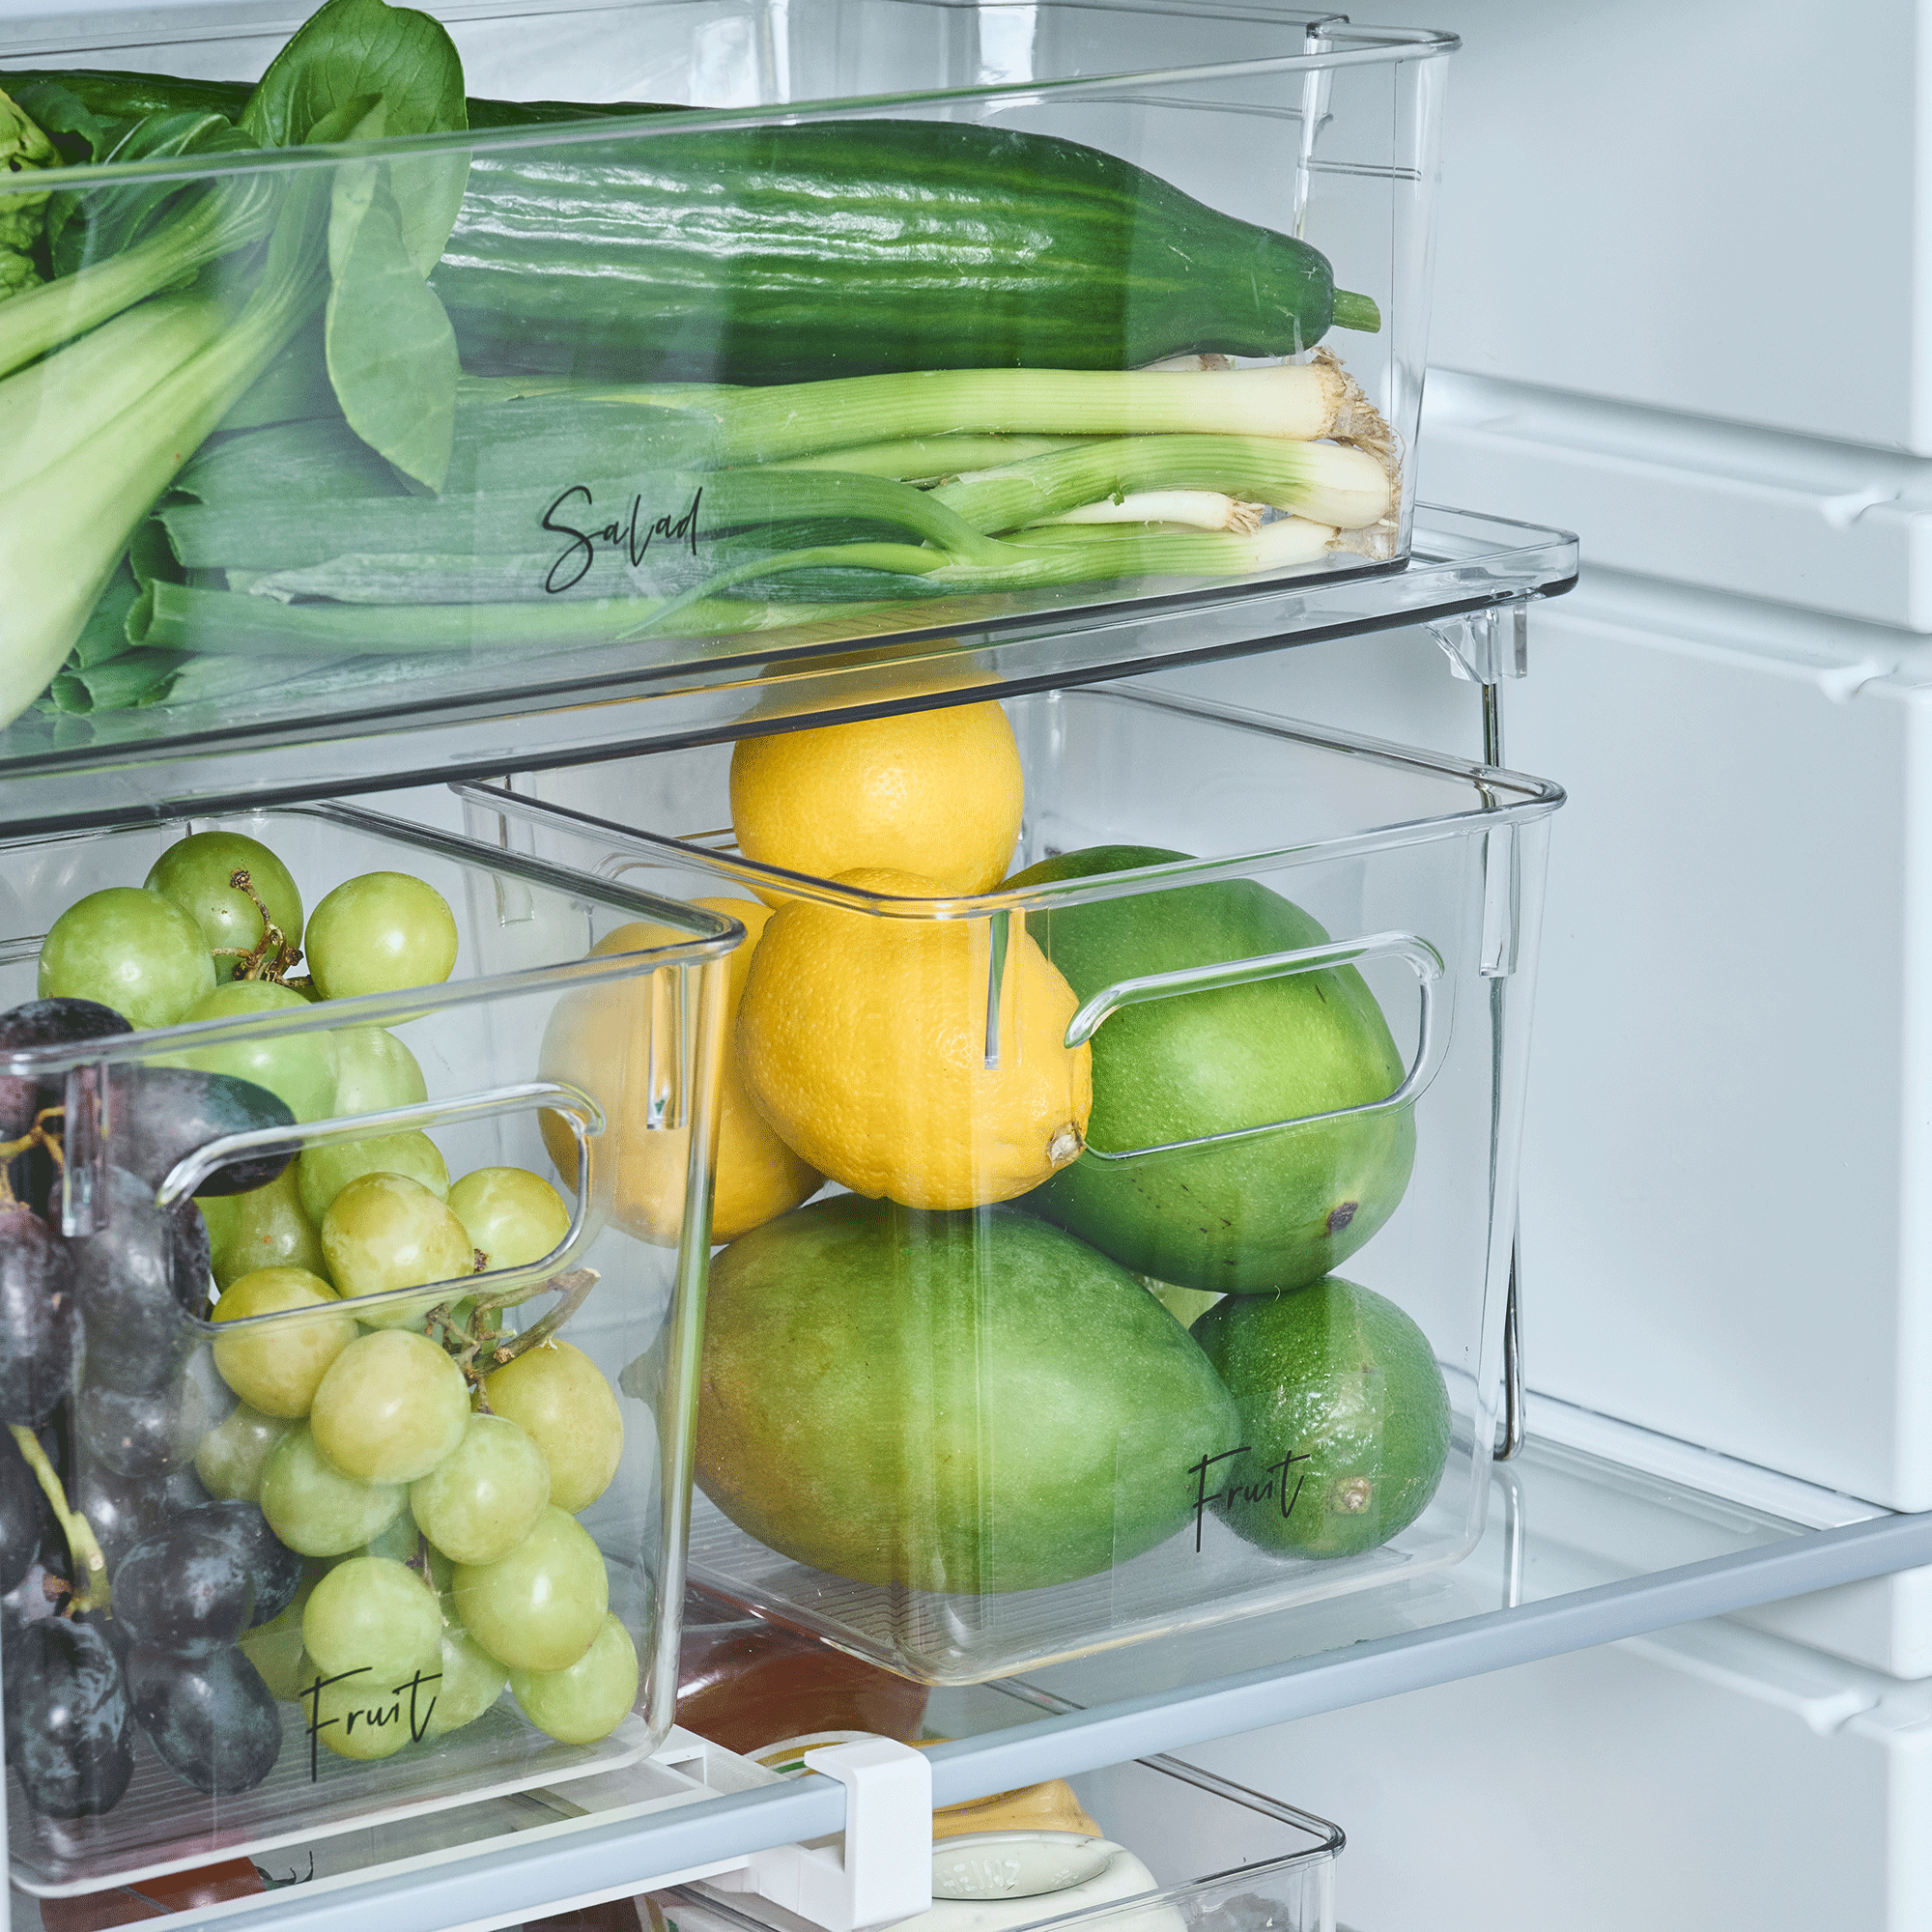 fruit in storage bins in fridge